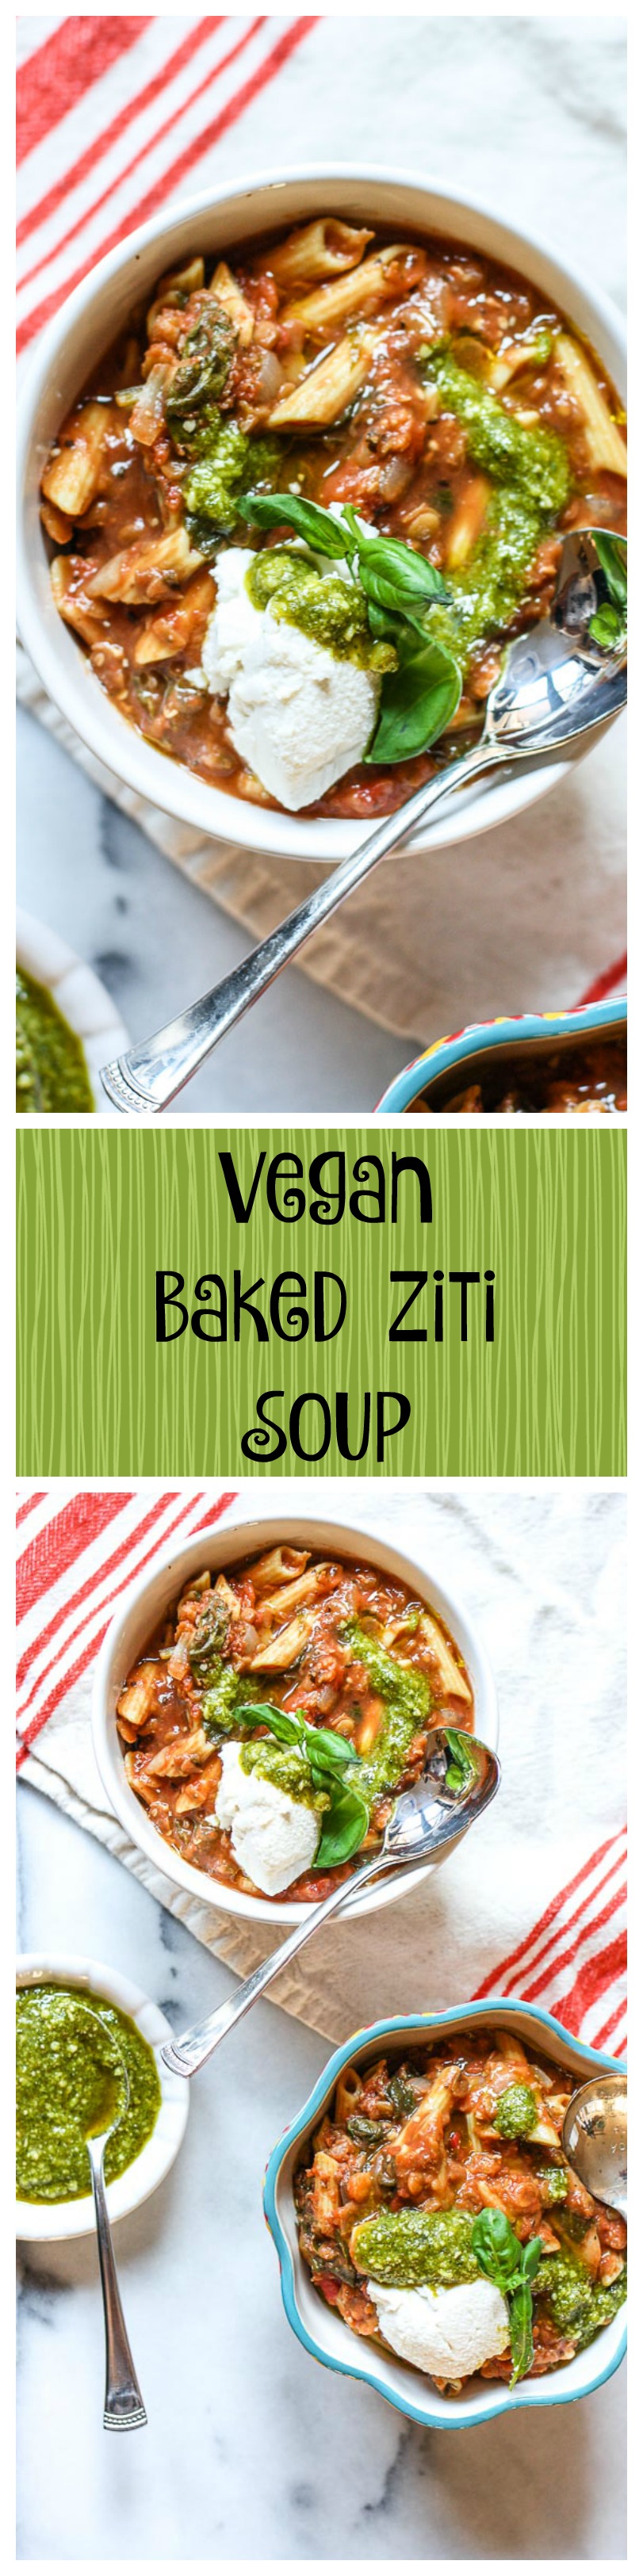 slow cooker vegan baked ziti soup